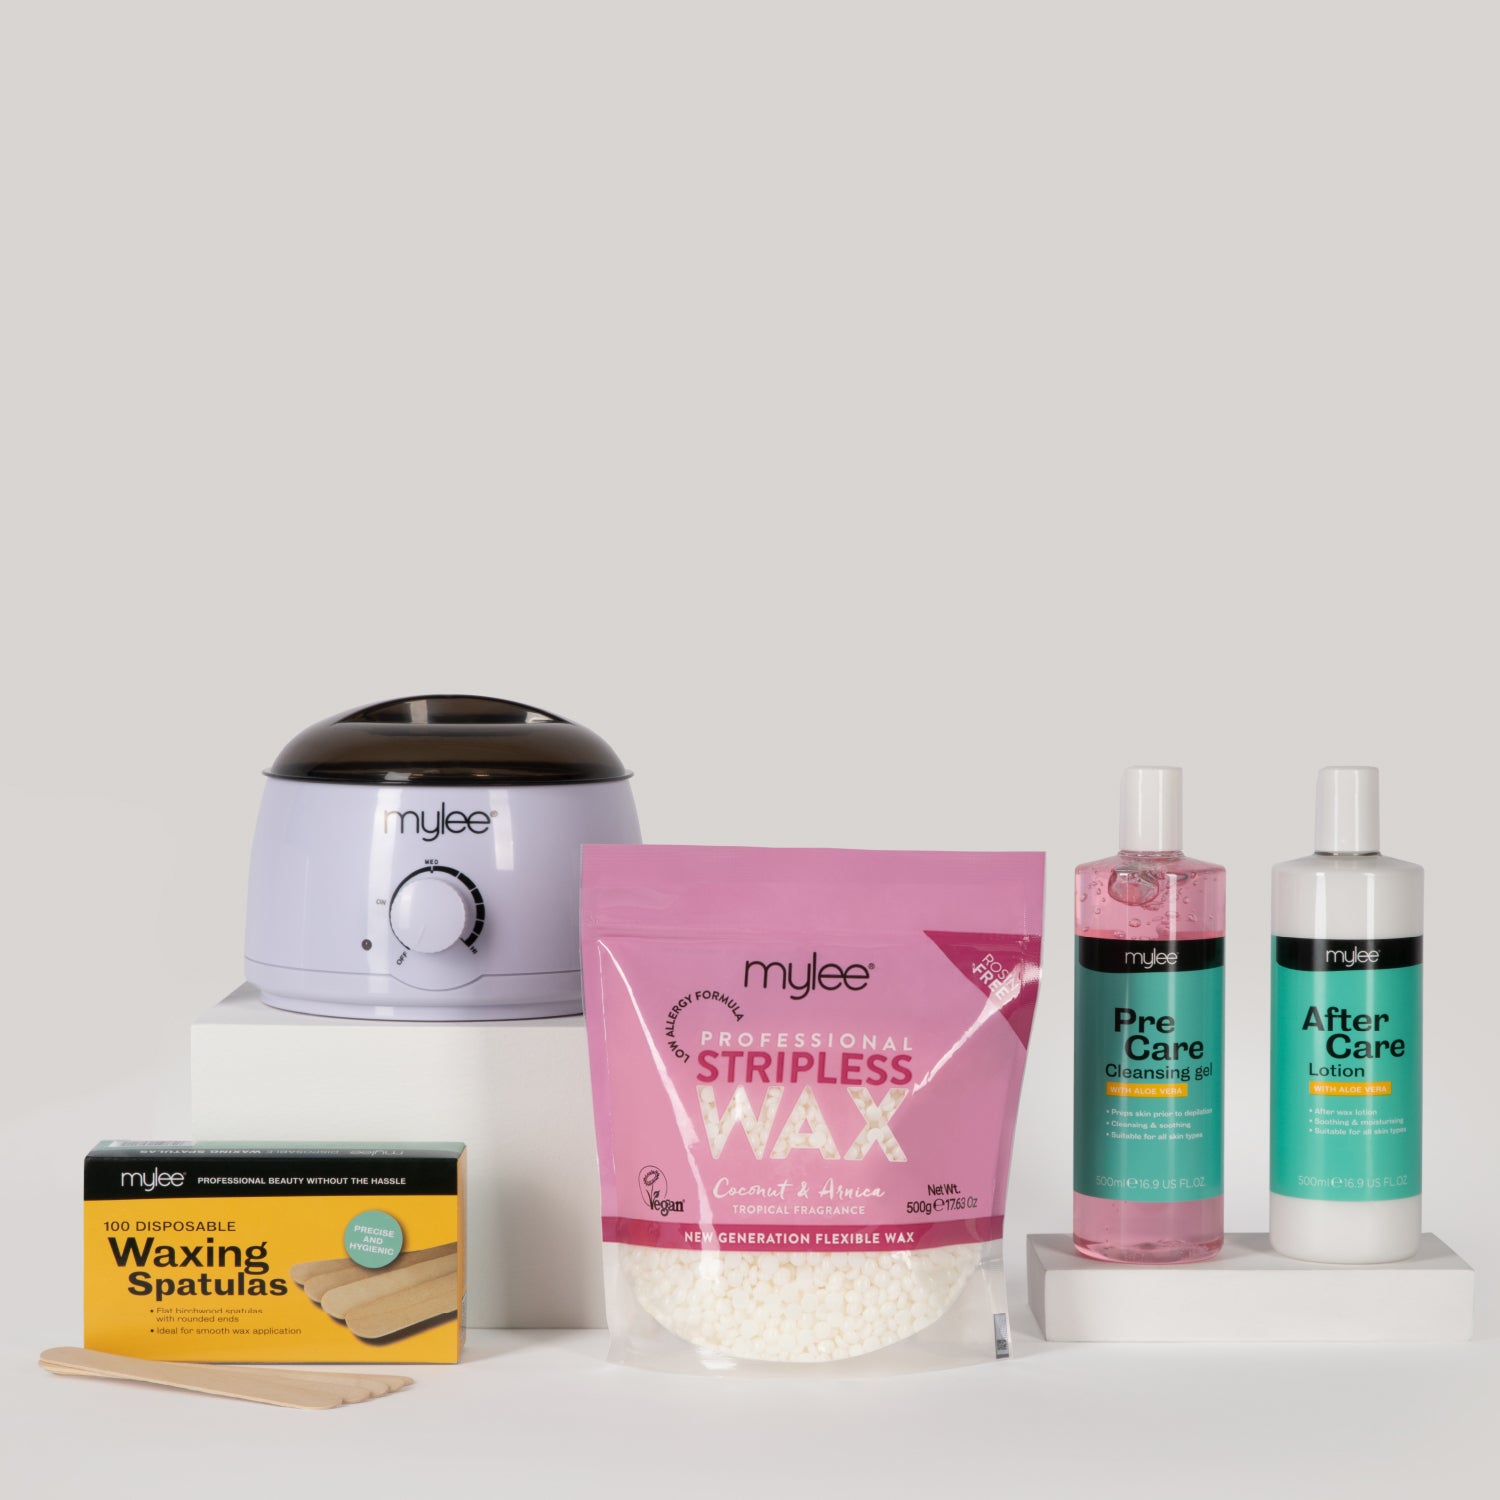 Mylee Professional Waxing Kit - Coconut & Arnica